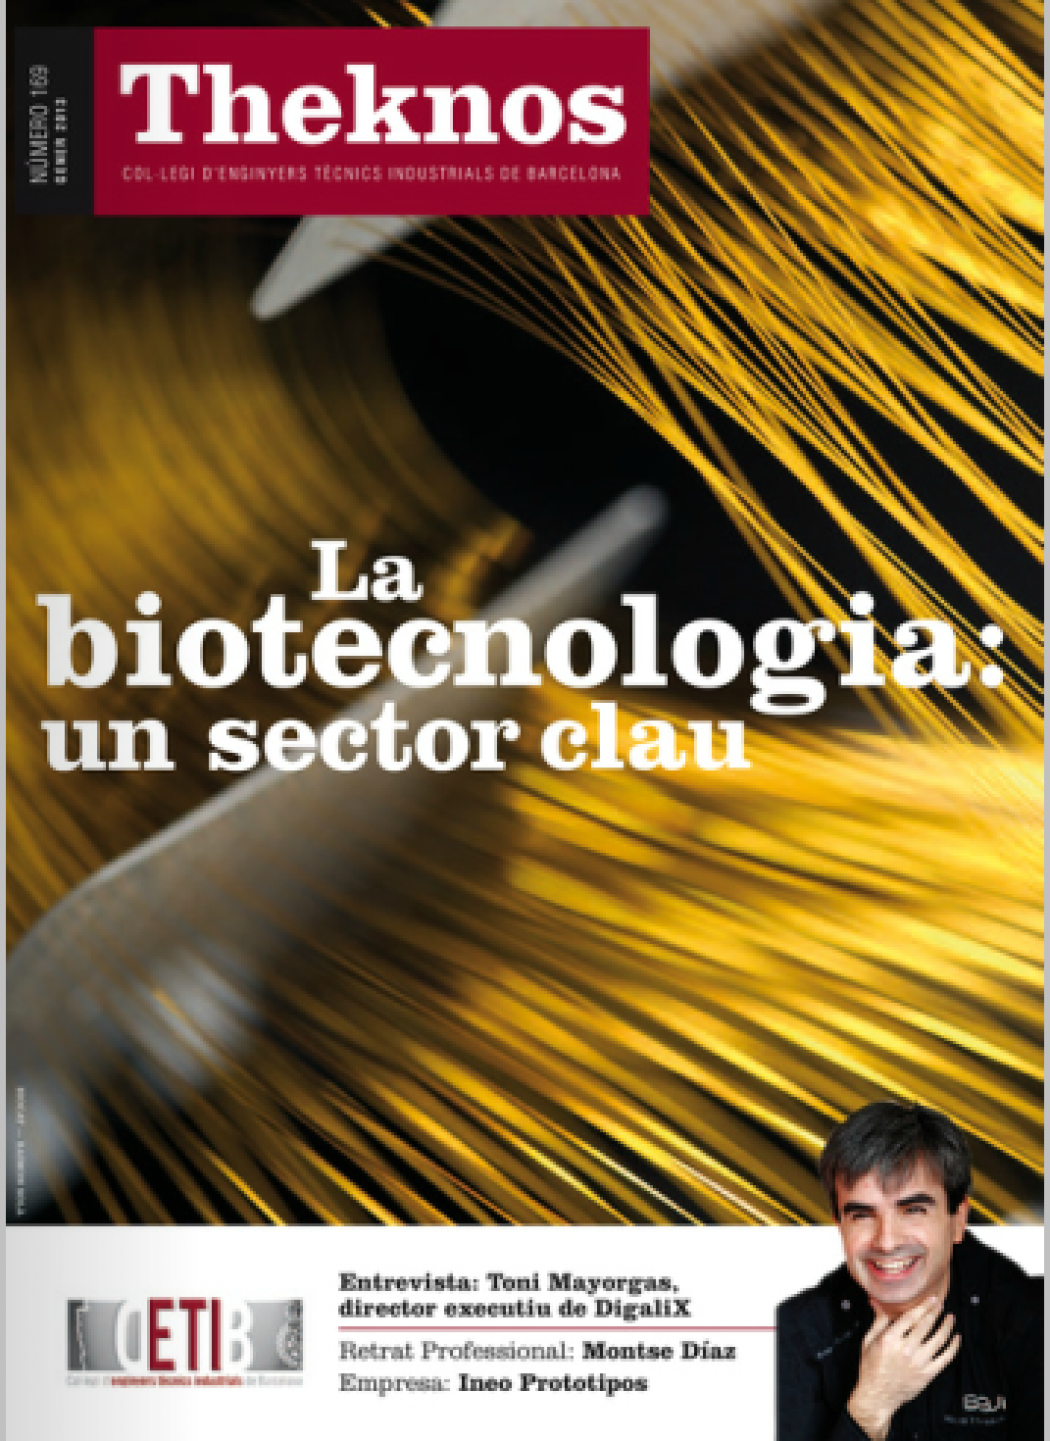 La biotecnologia: un sector clau